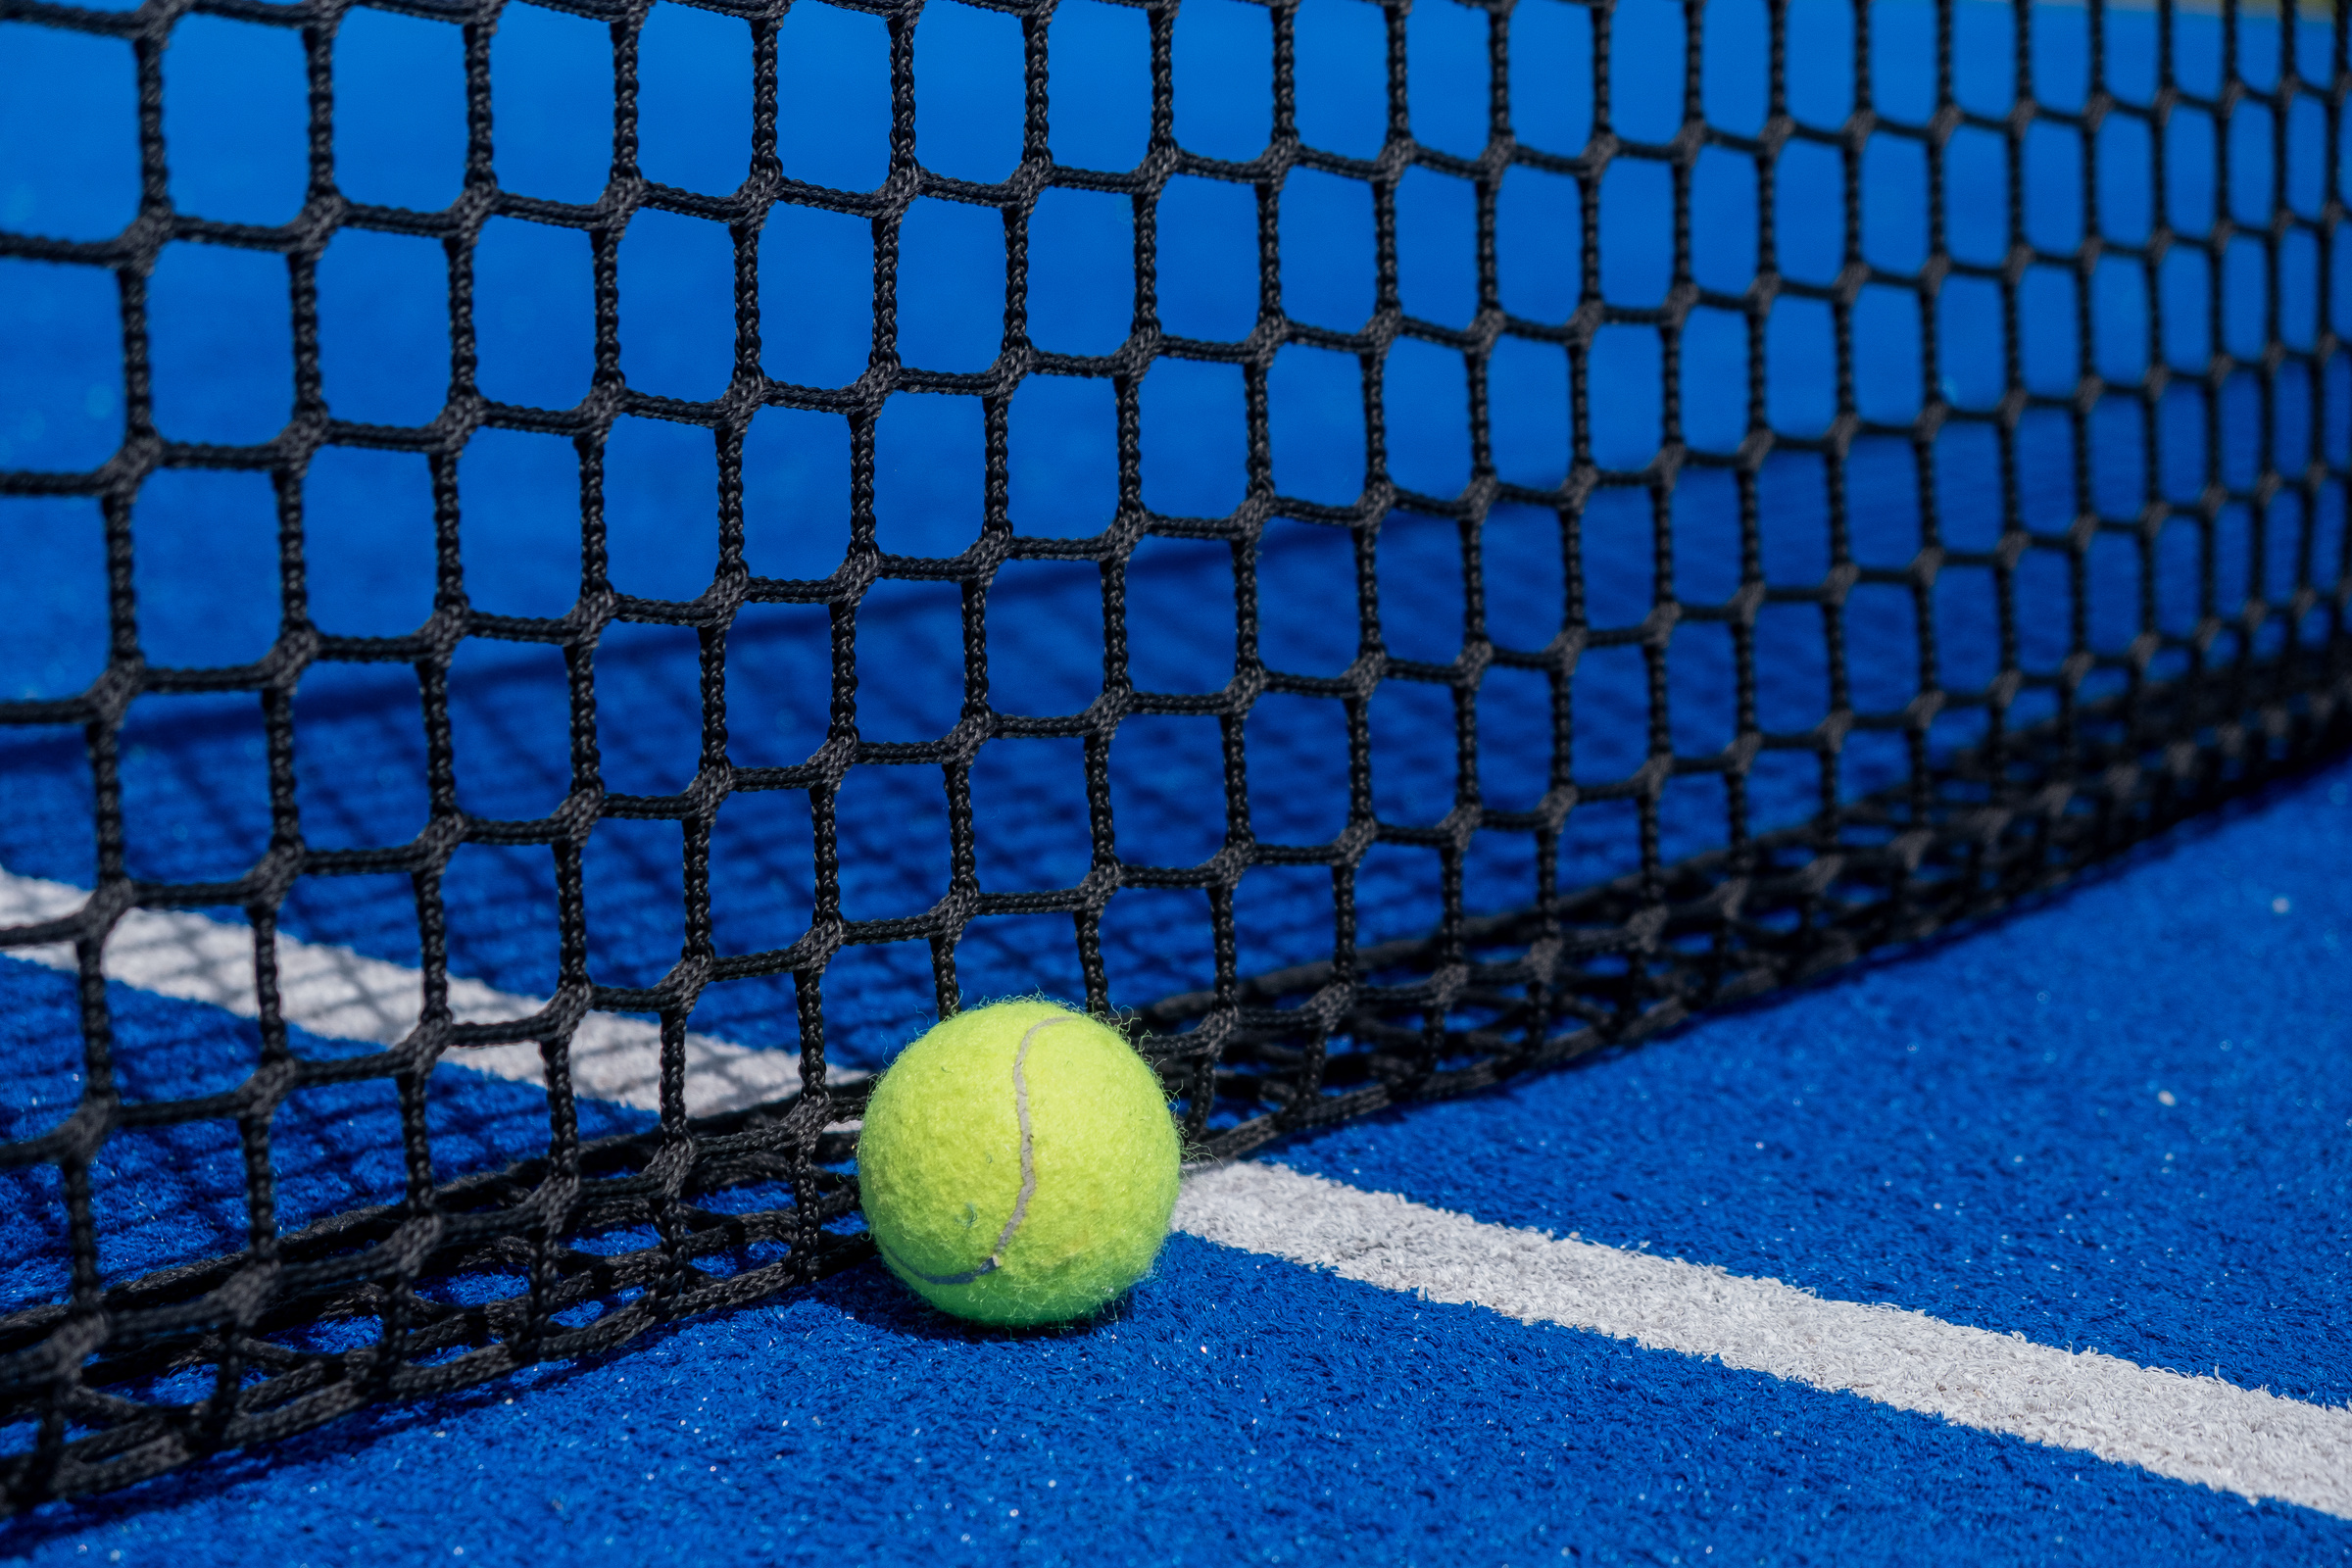 Blue paddle tennis court netting